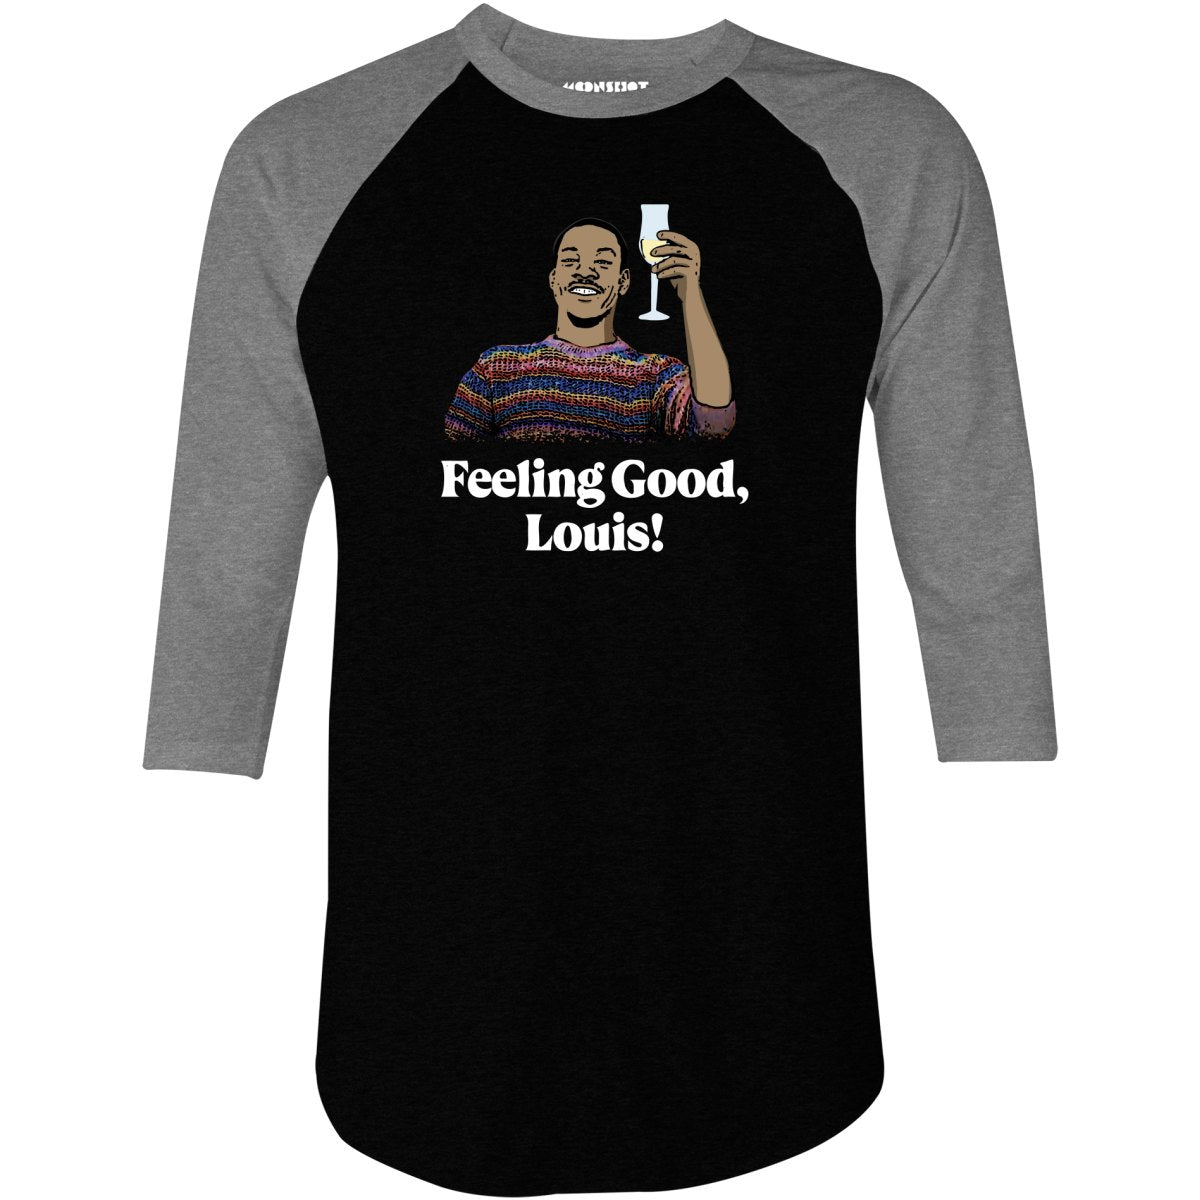 Feeling Good, Louis! - 3/4 Sleeve Raglan T-Shirt